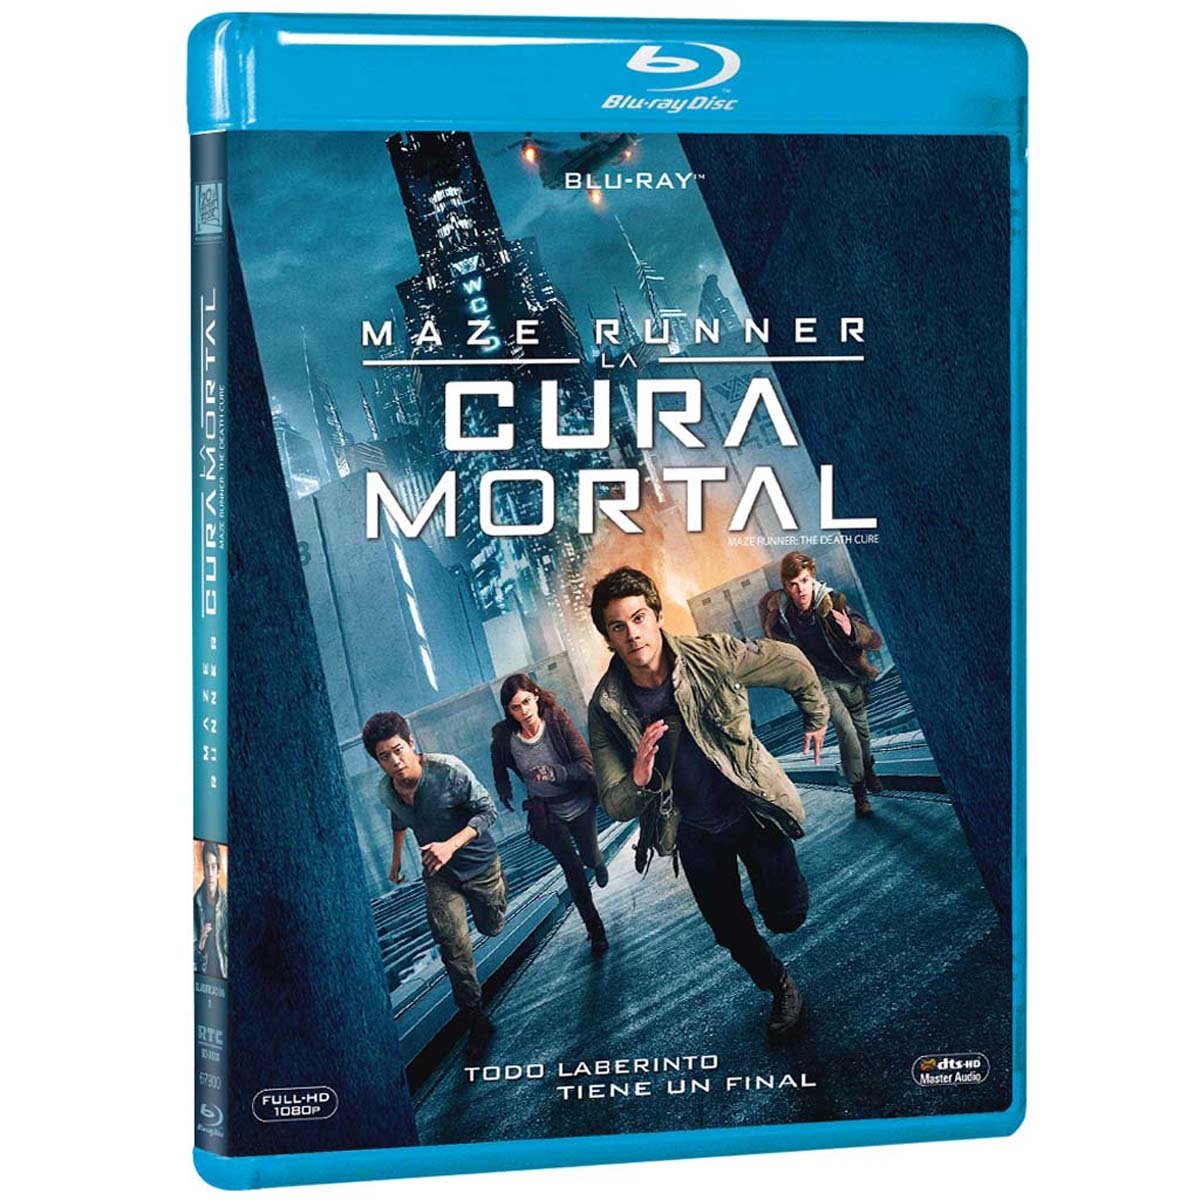 Blu Ray Maze Runner la Cura Mortal